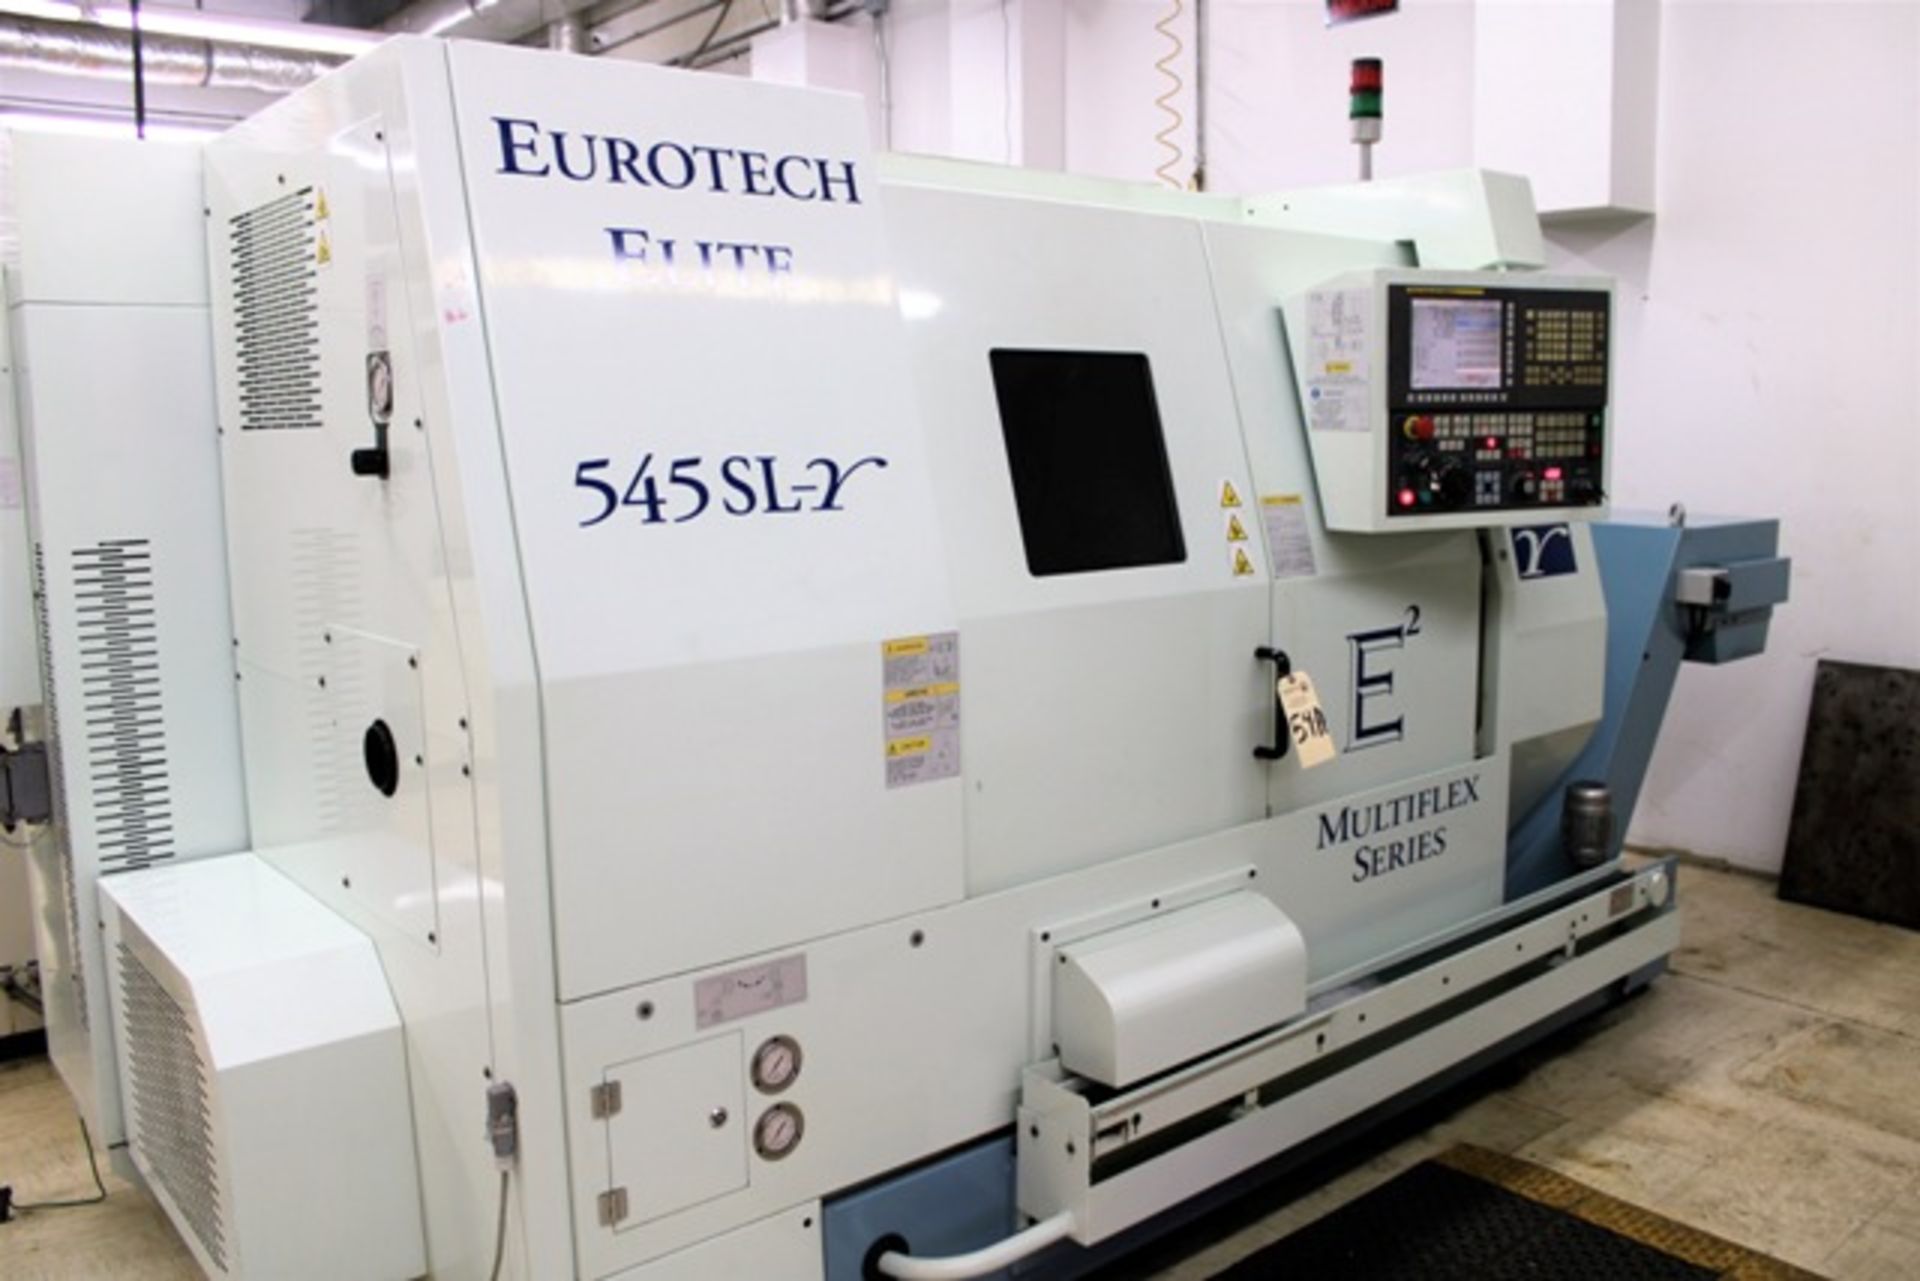 Eurotech Elite 545 SL-Y Mill-Turn CNC Lathe